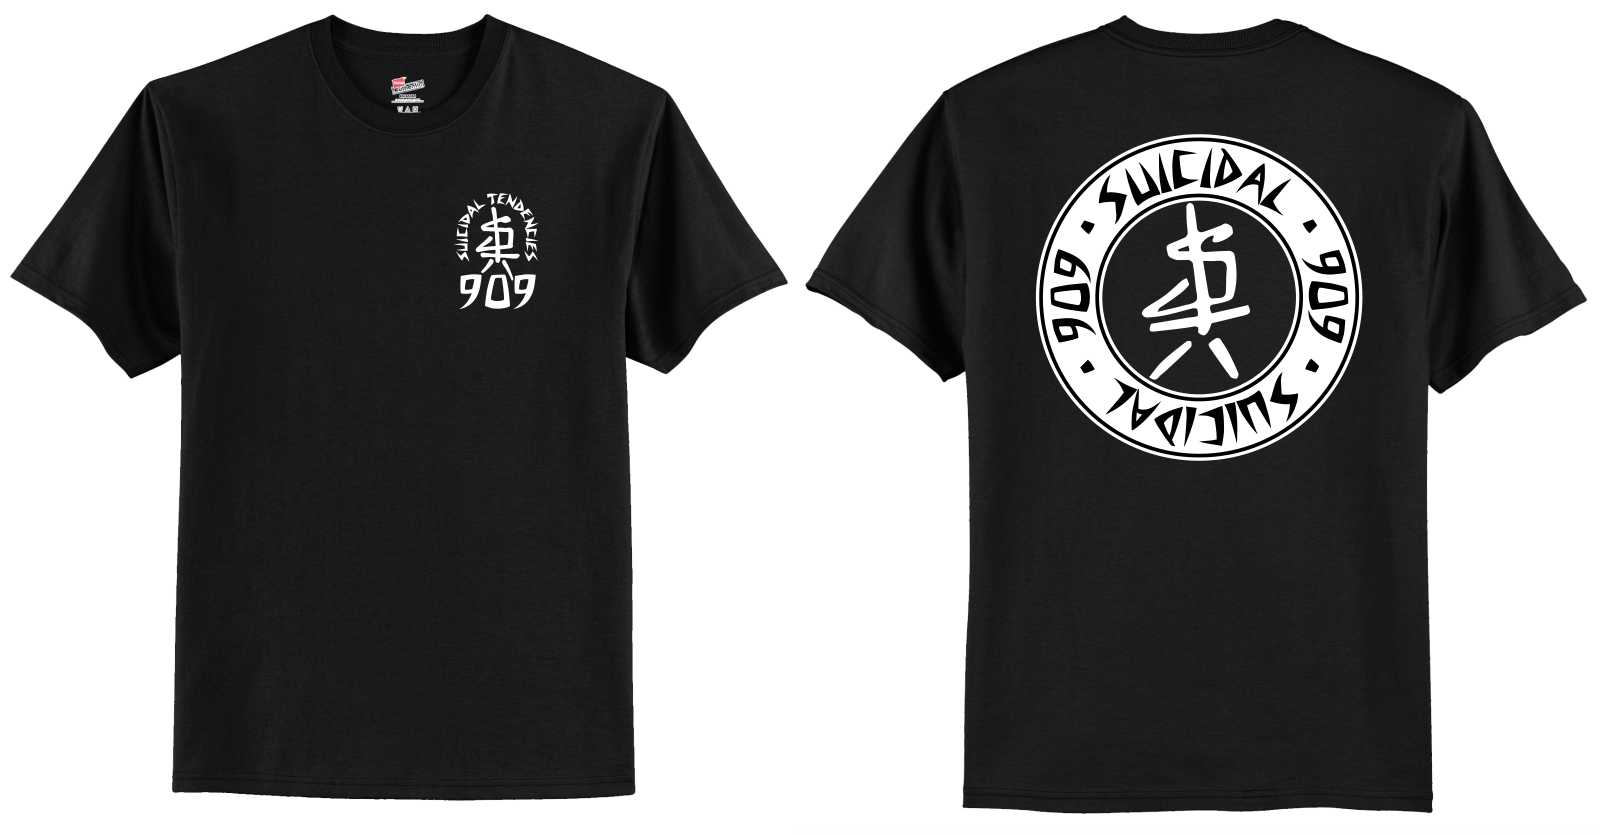 Suicidal Tendencies 909 California Limited Edition T-Shirt